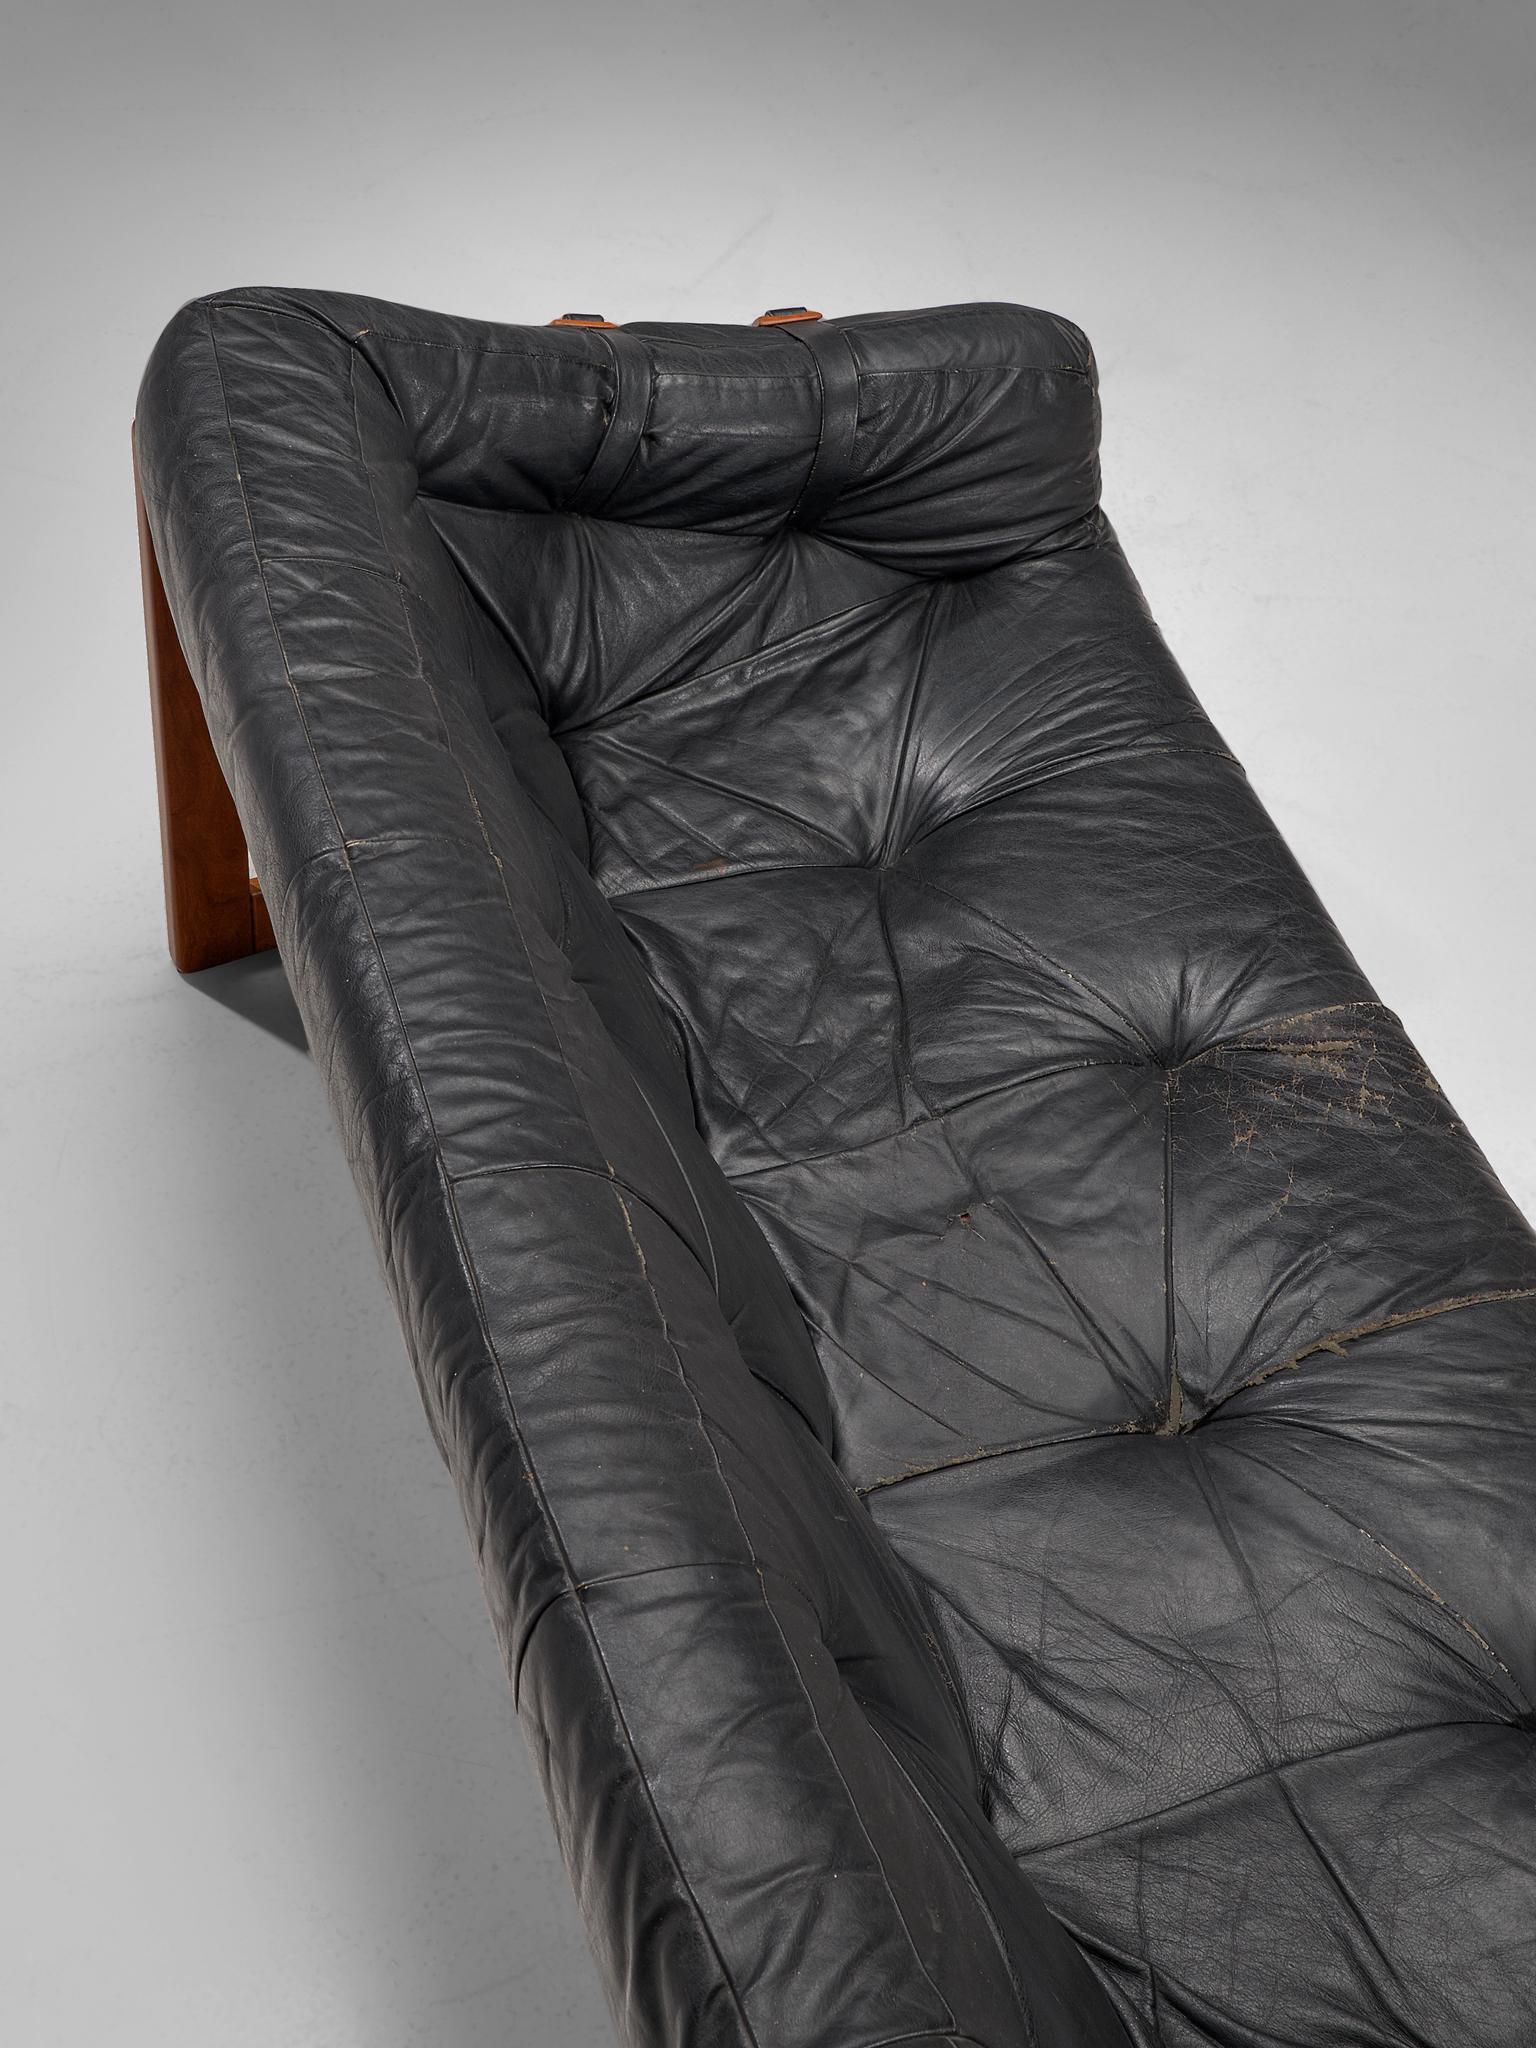 Percival Lafer Sofa in Original Black Leather 2